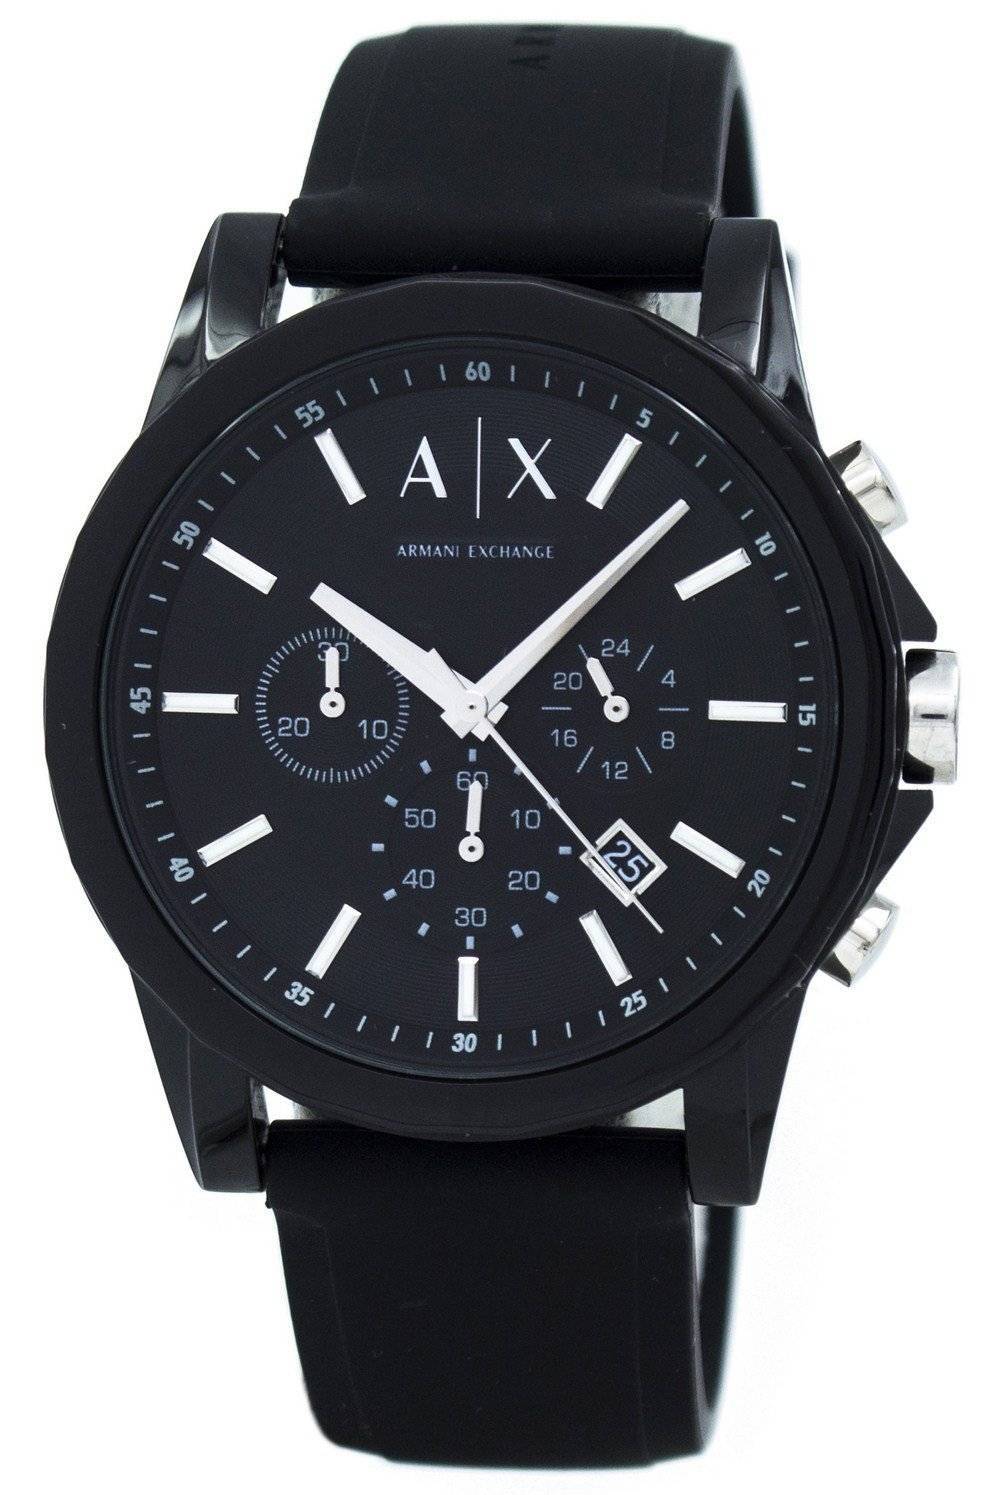 Đồng hồ đeo tay nam Armani Exchange Active Chronograph Quartz AX1326 vi